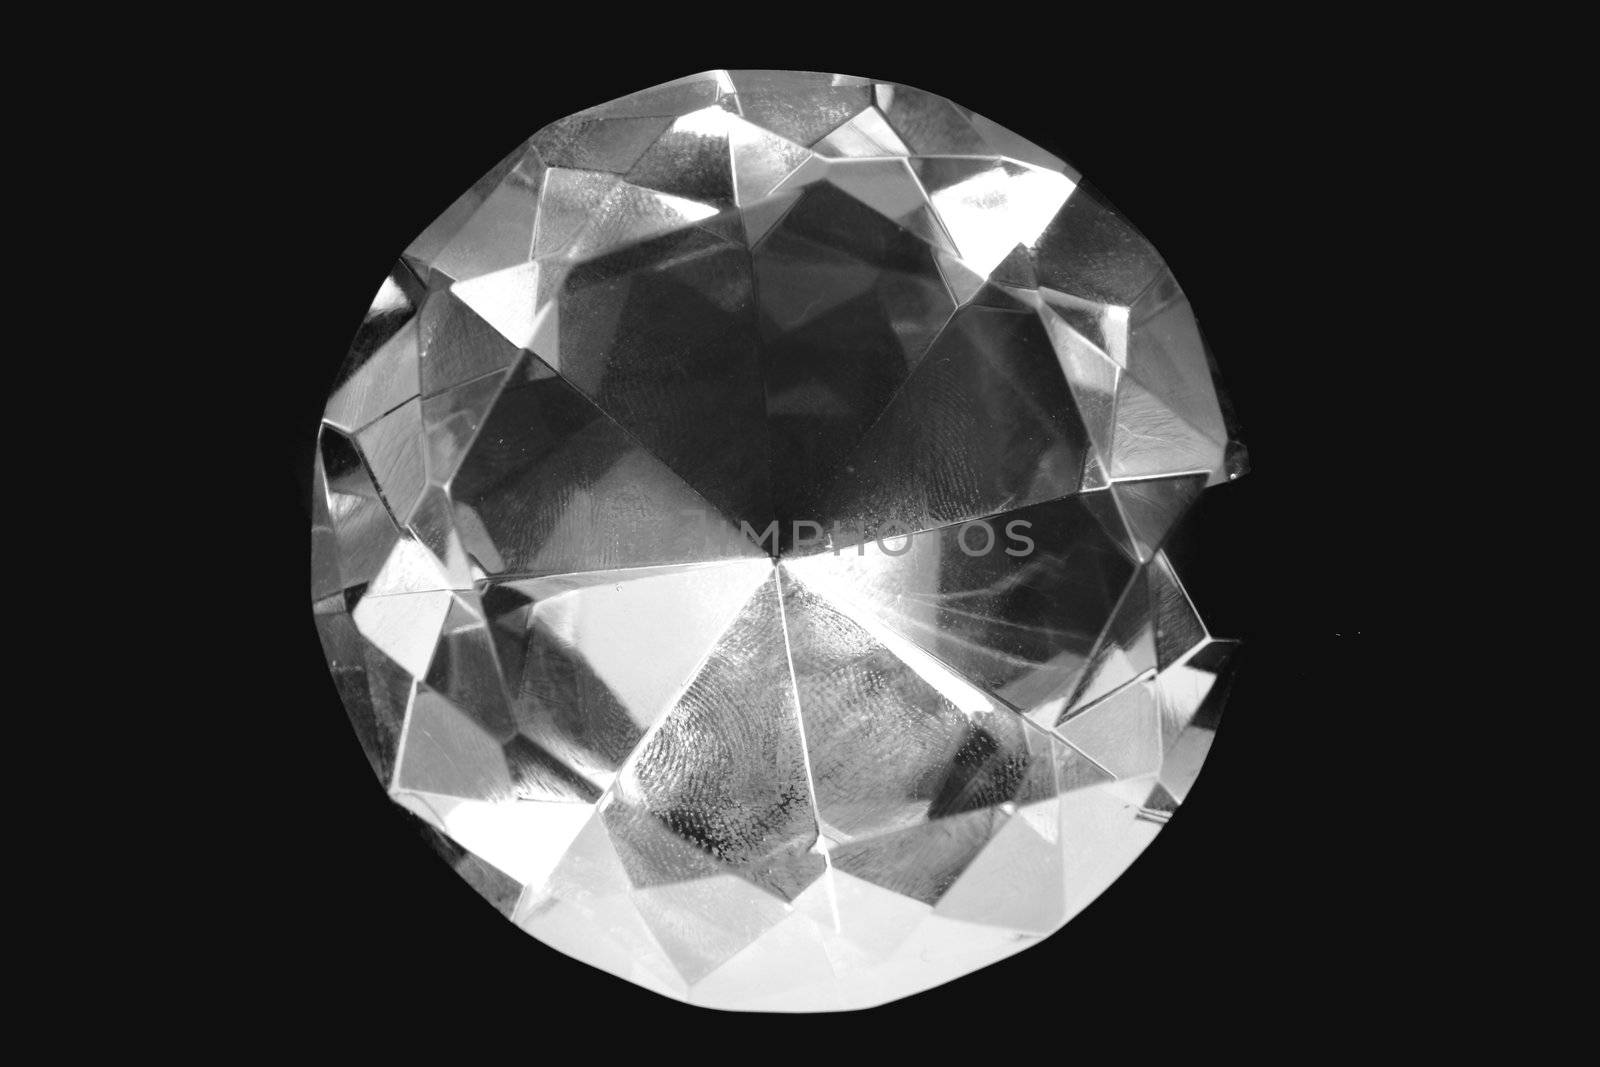 diamond on the black background by jonnysek